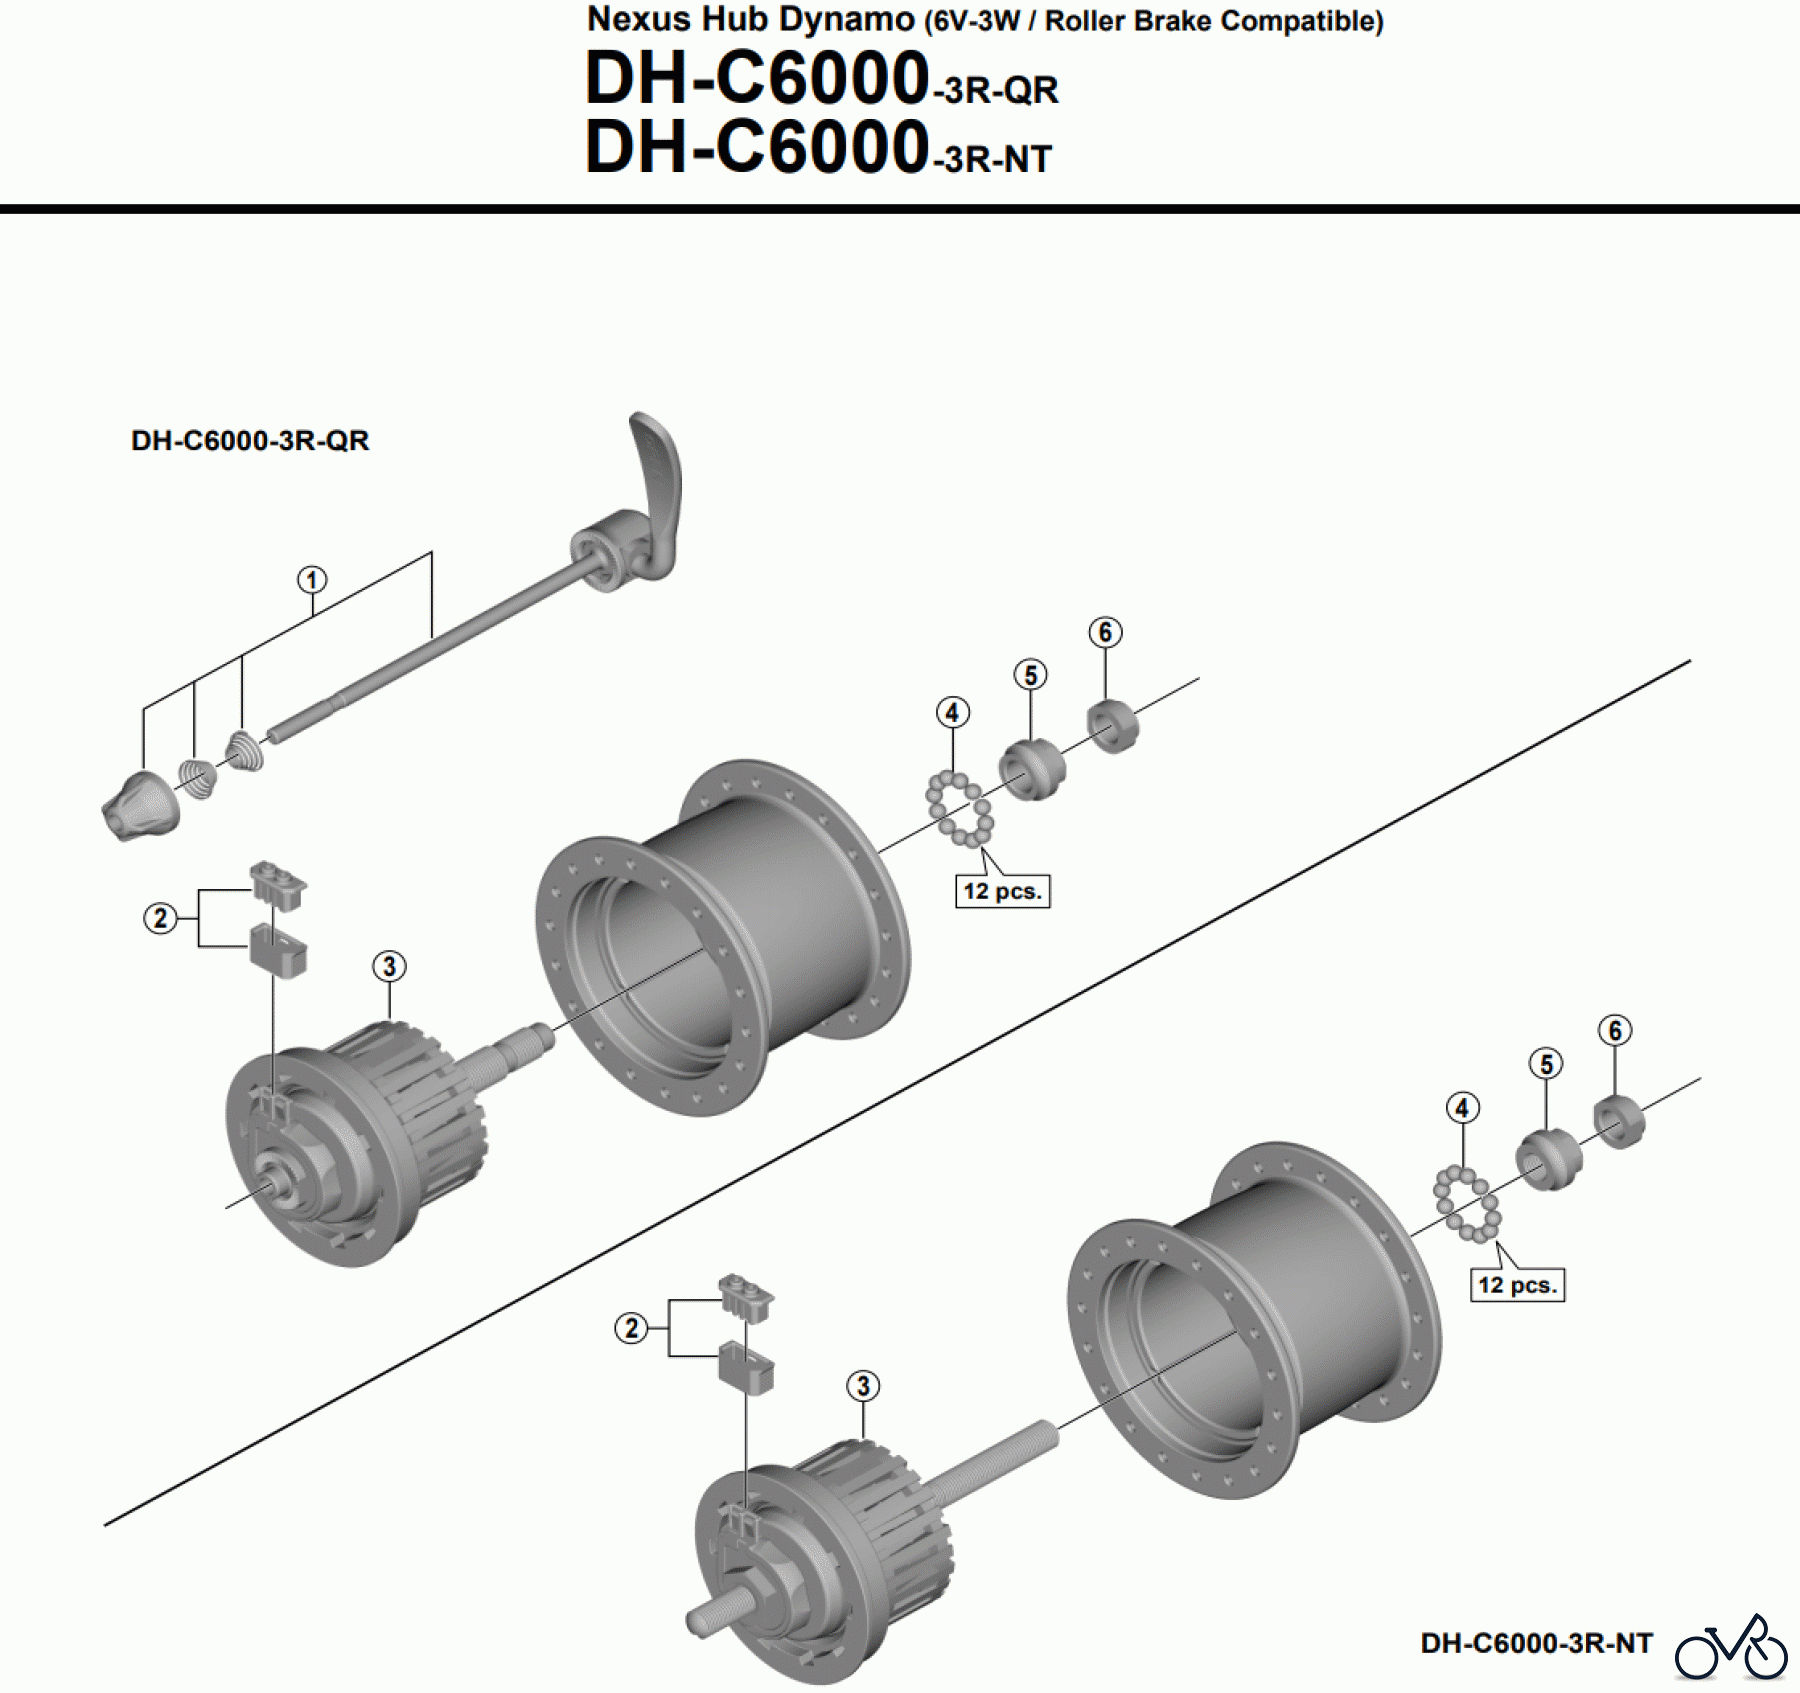  Shimano DH Dynamo Hub - Nabendynamo DH-C6000-3R Nexus Hub Dynamo (6V-3W / Roller Brake Compatible)